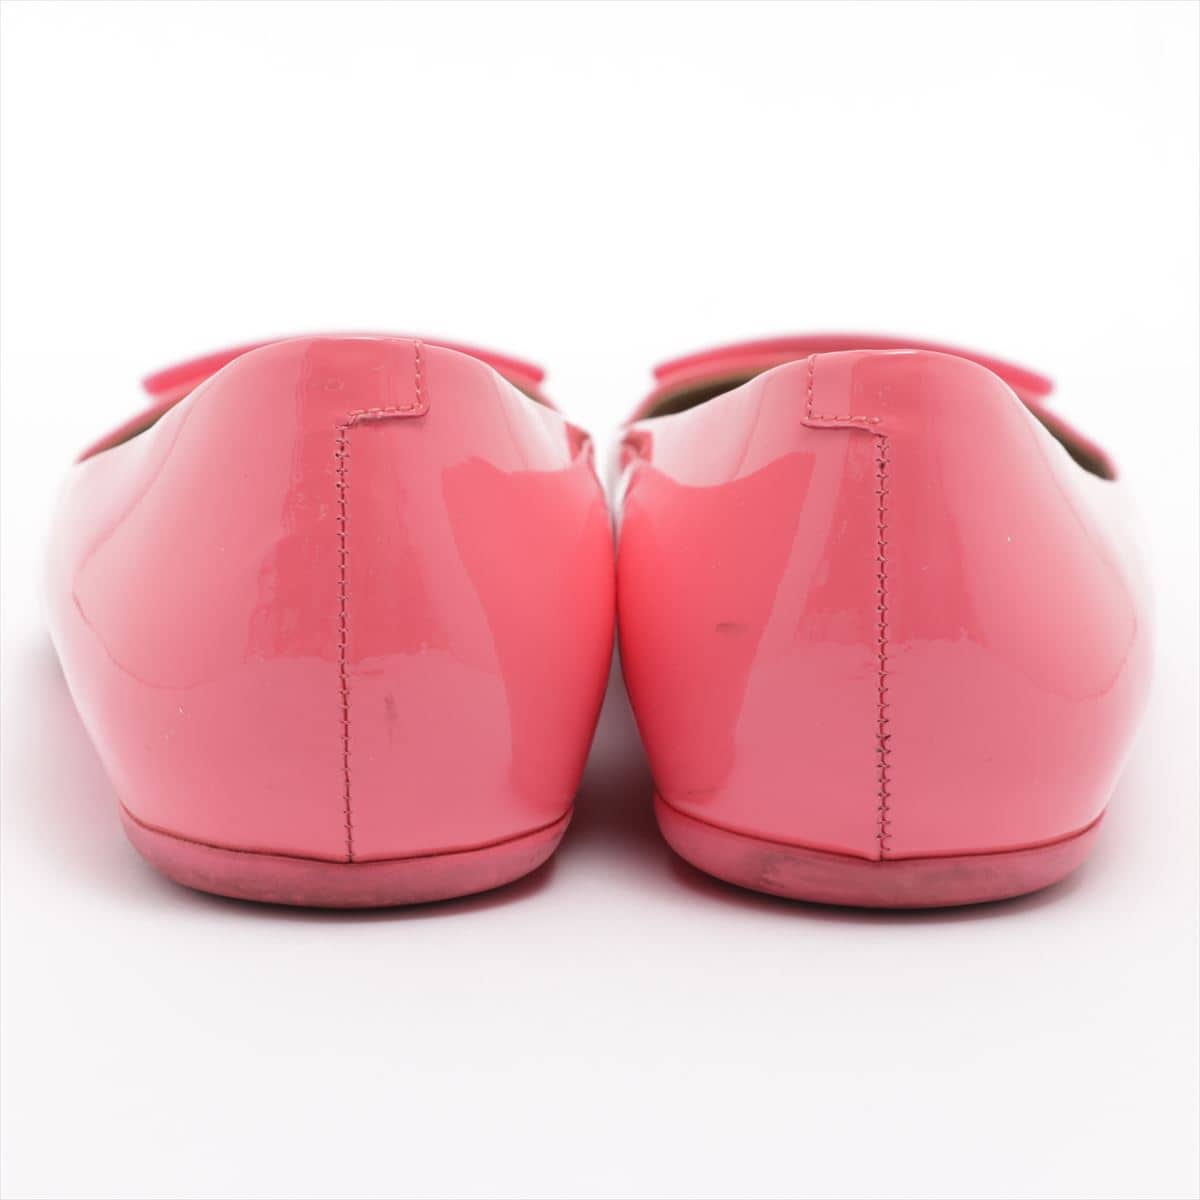 Roger Vivier Patent leather Flat Pumps 37.5 Ladies' Pink